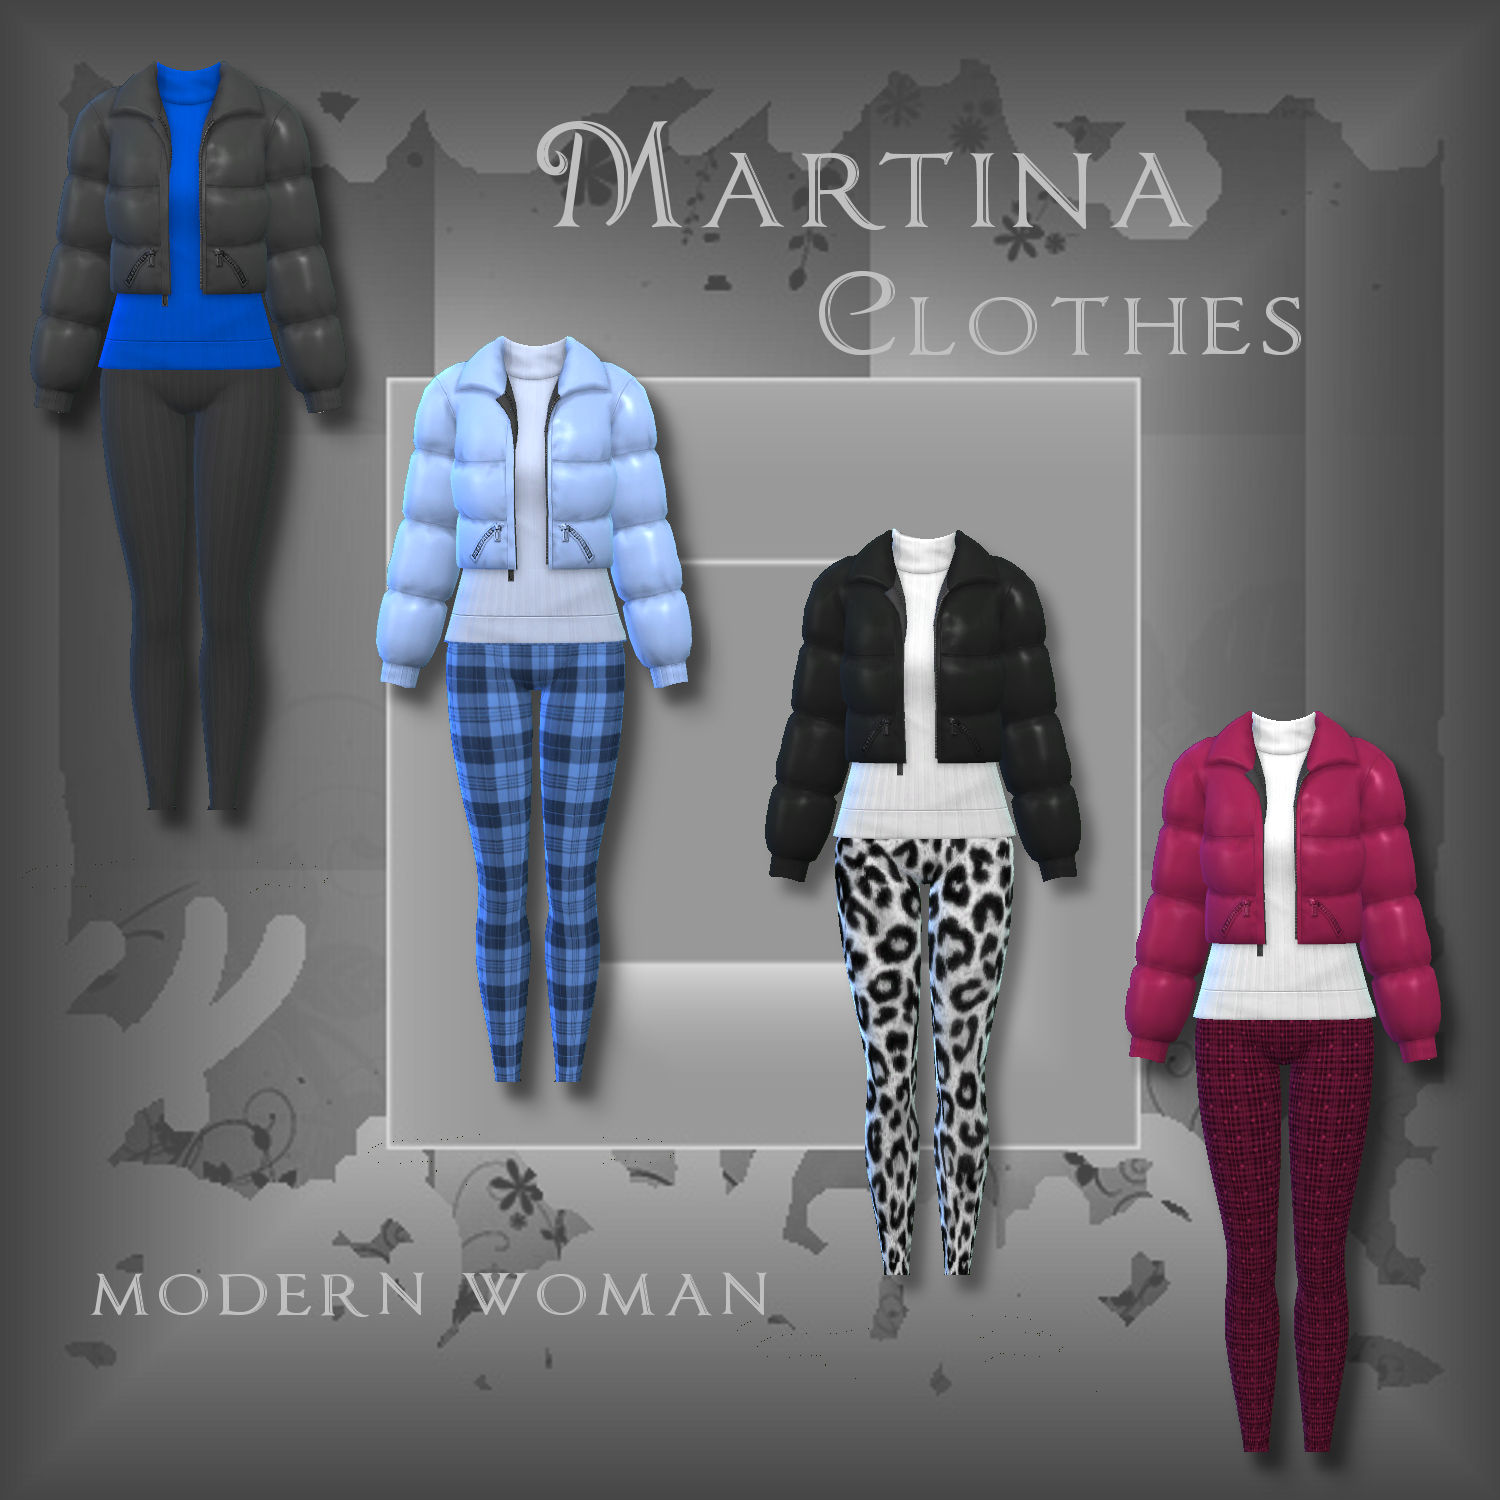 Martina clothing - The Sims 4 Create a Sim - CurseForge